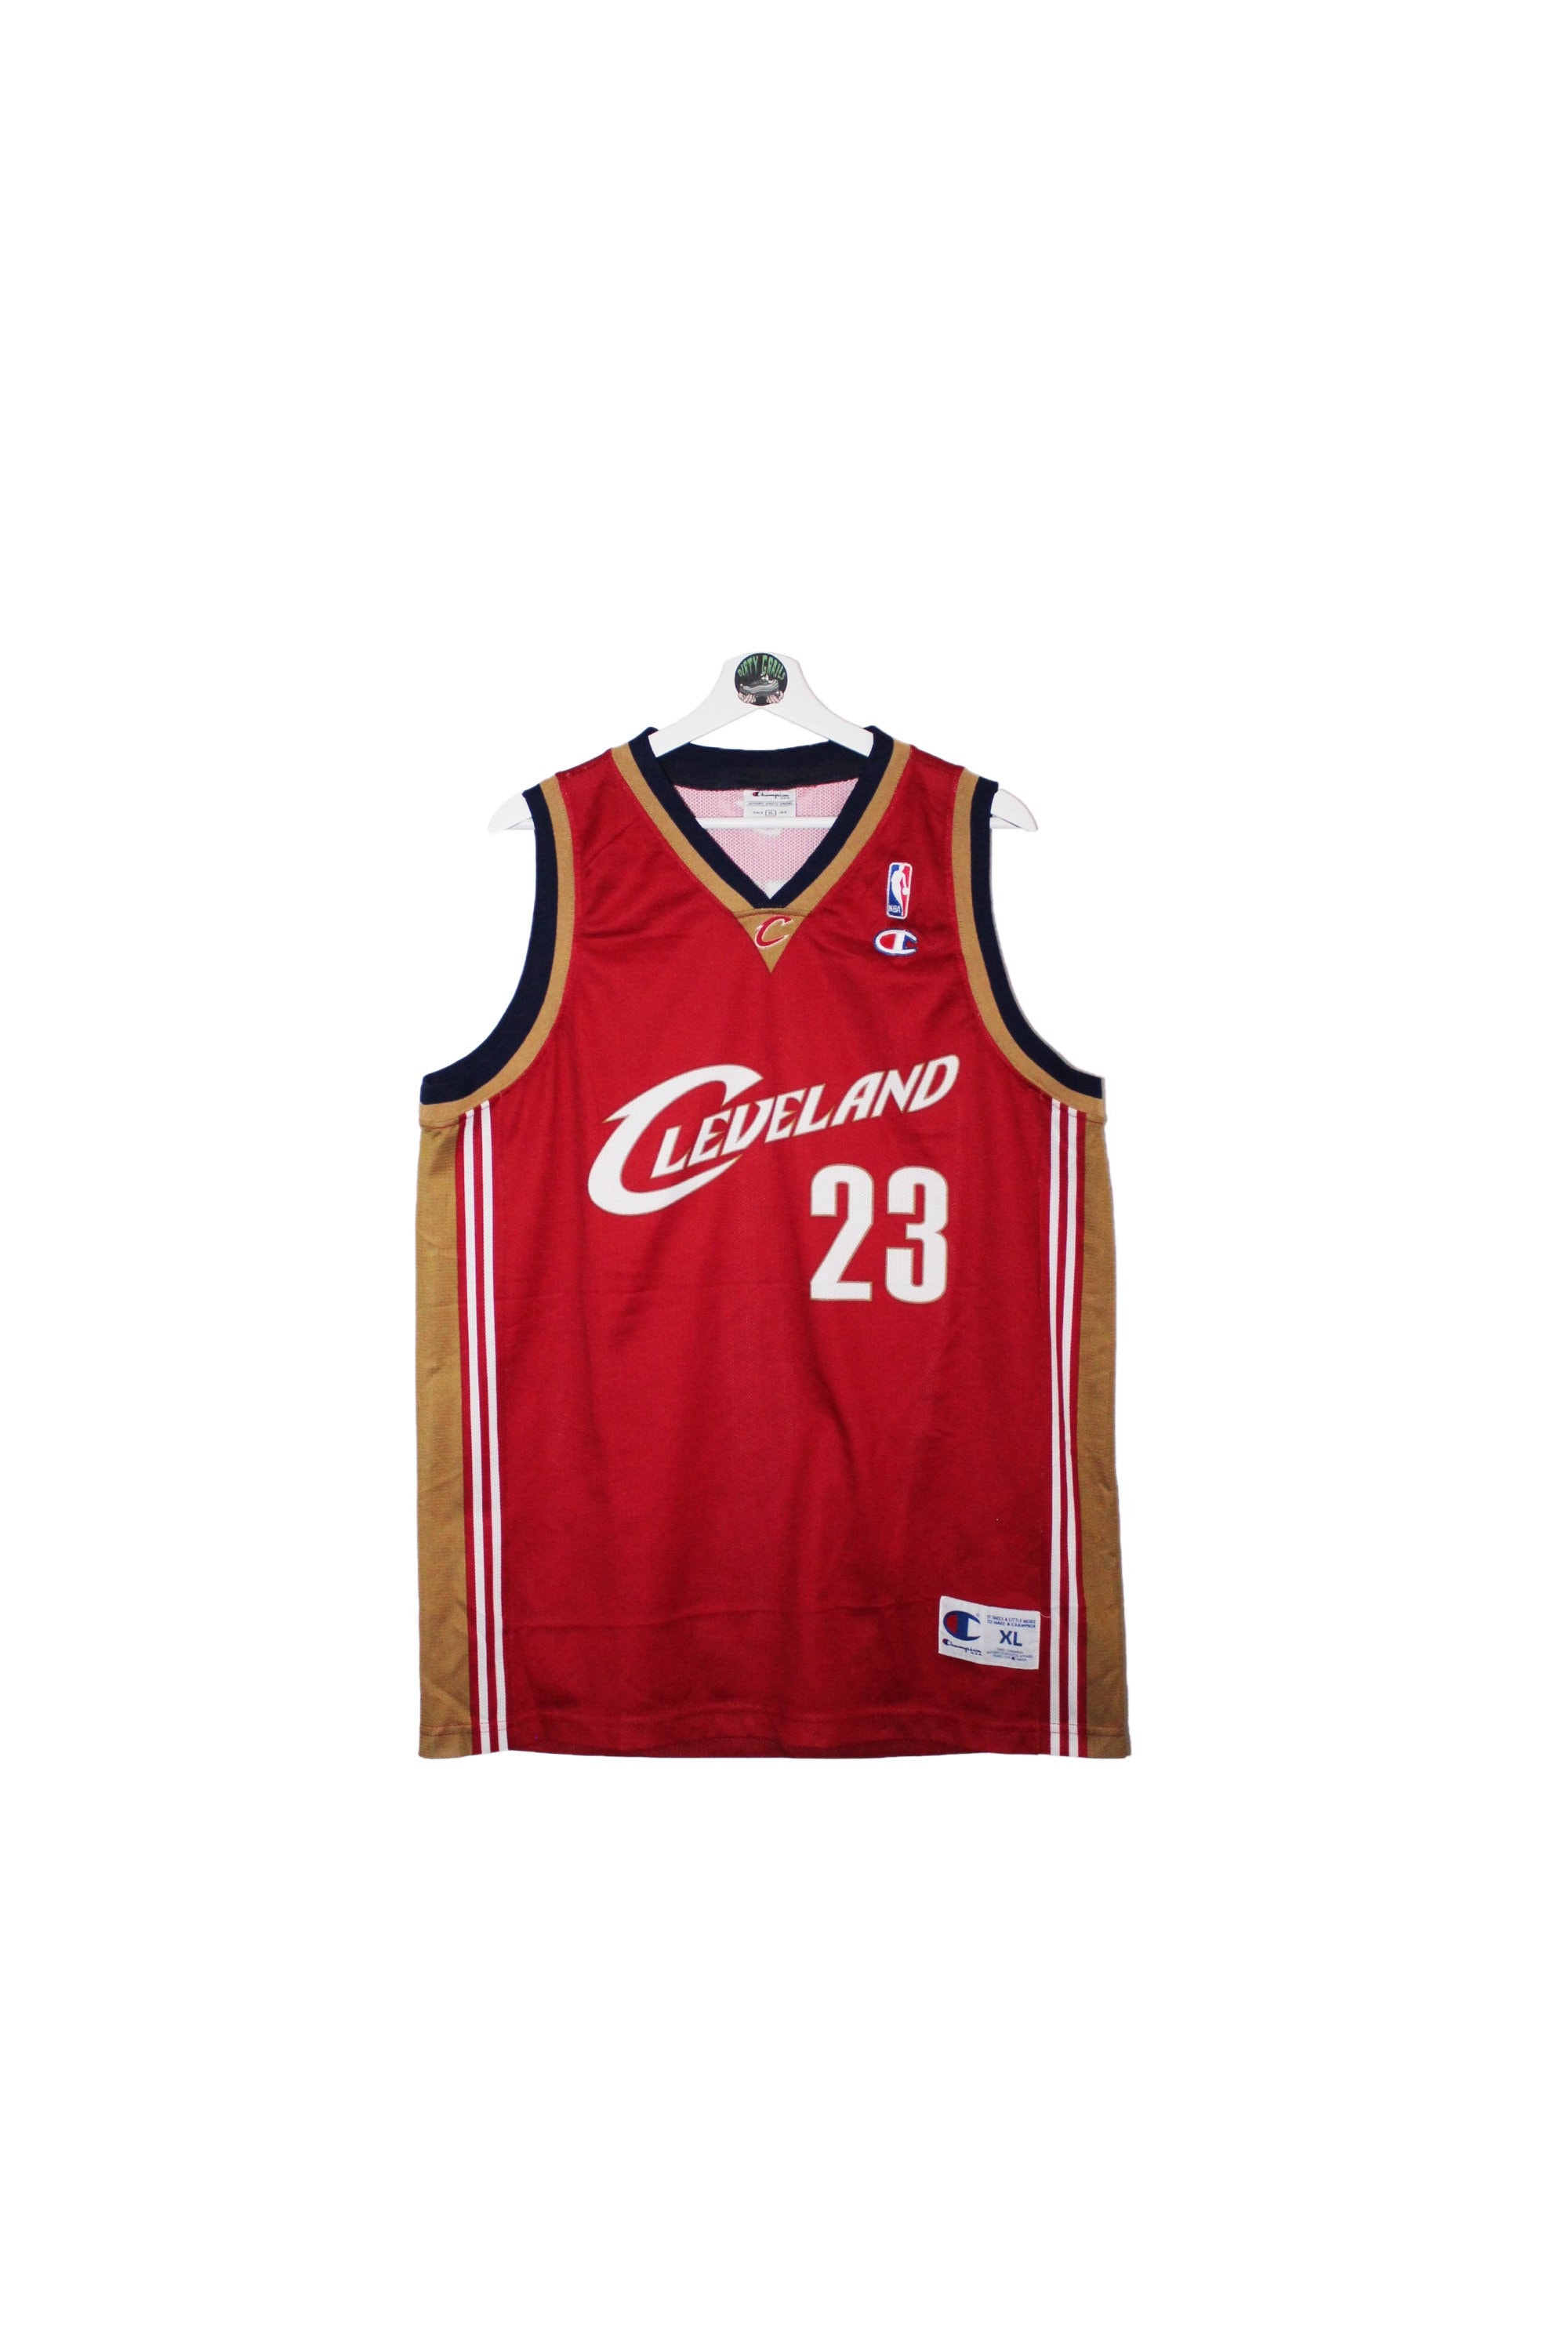 Reebok NBA Team Apparel Cleveland Cavaliers #23 Lebron James Vintage Jersey  Sz L